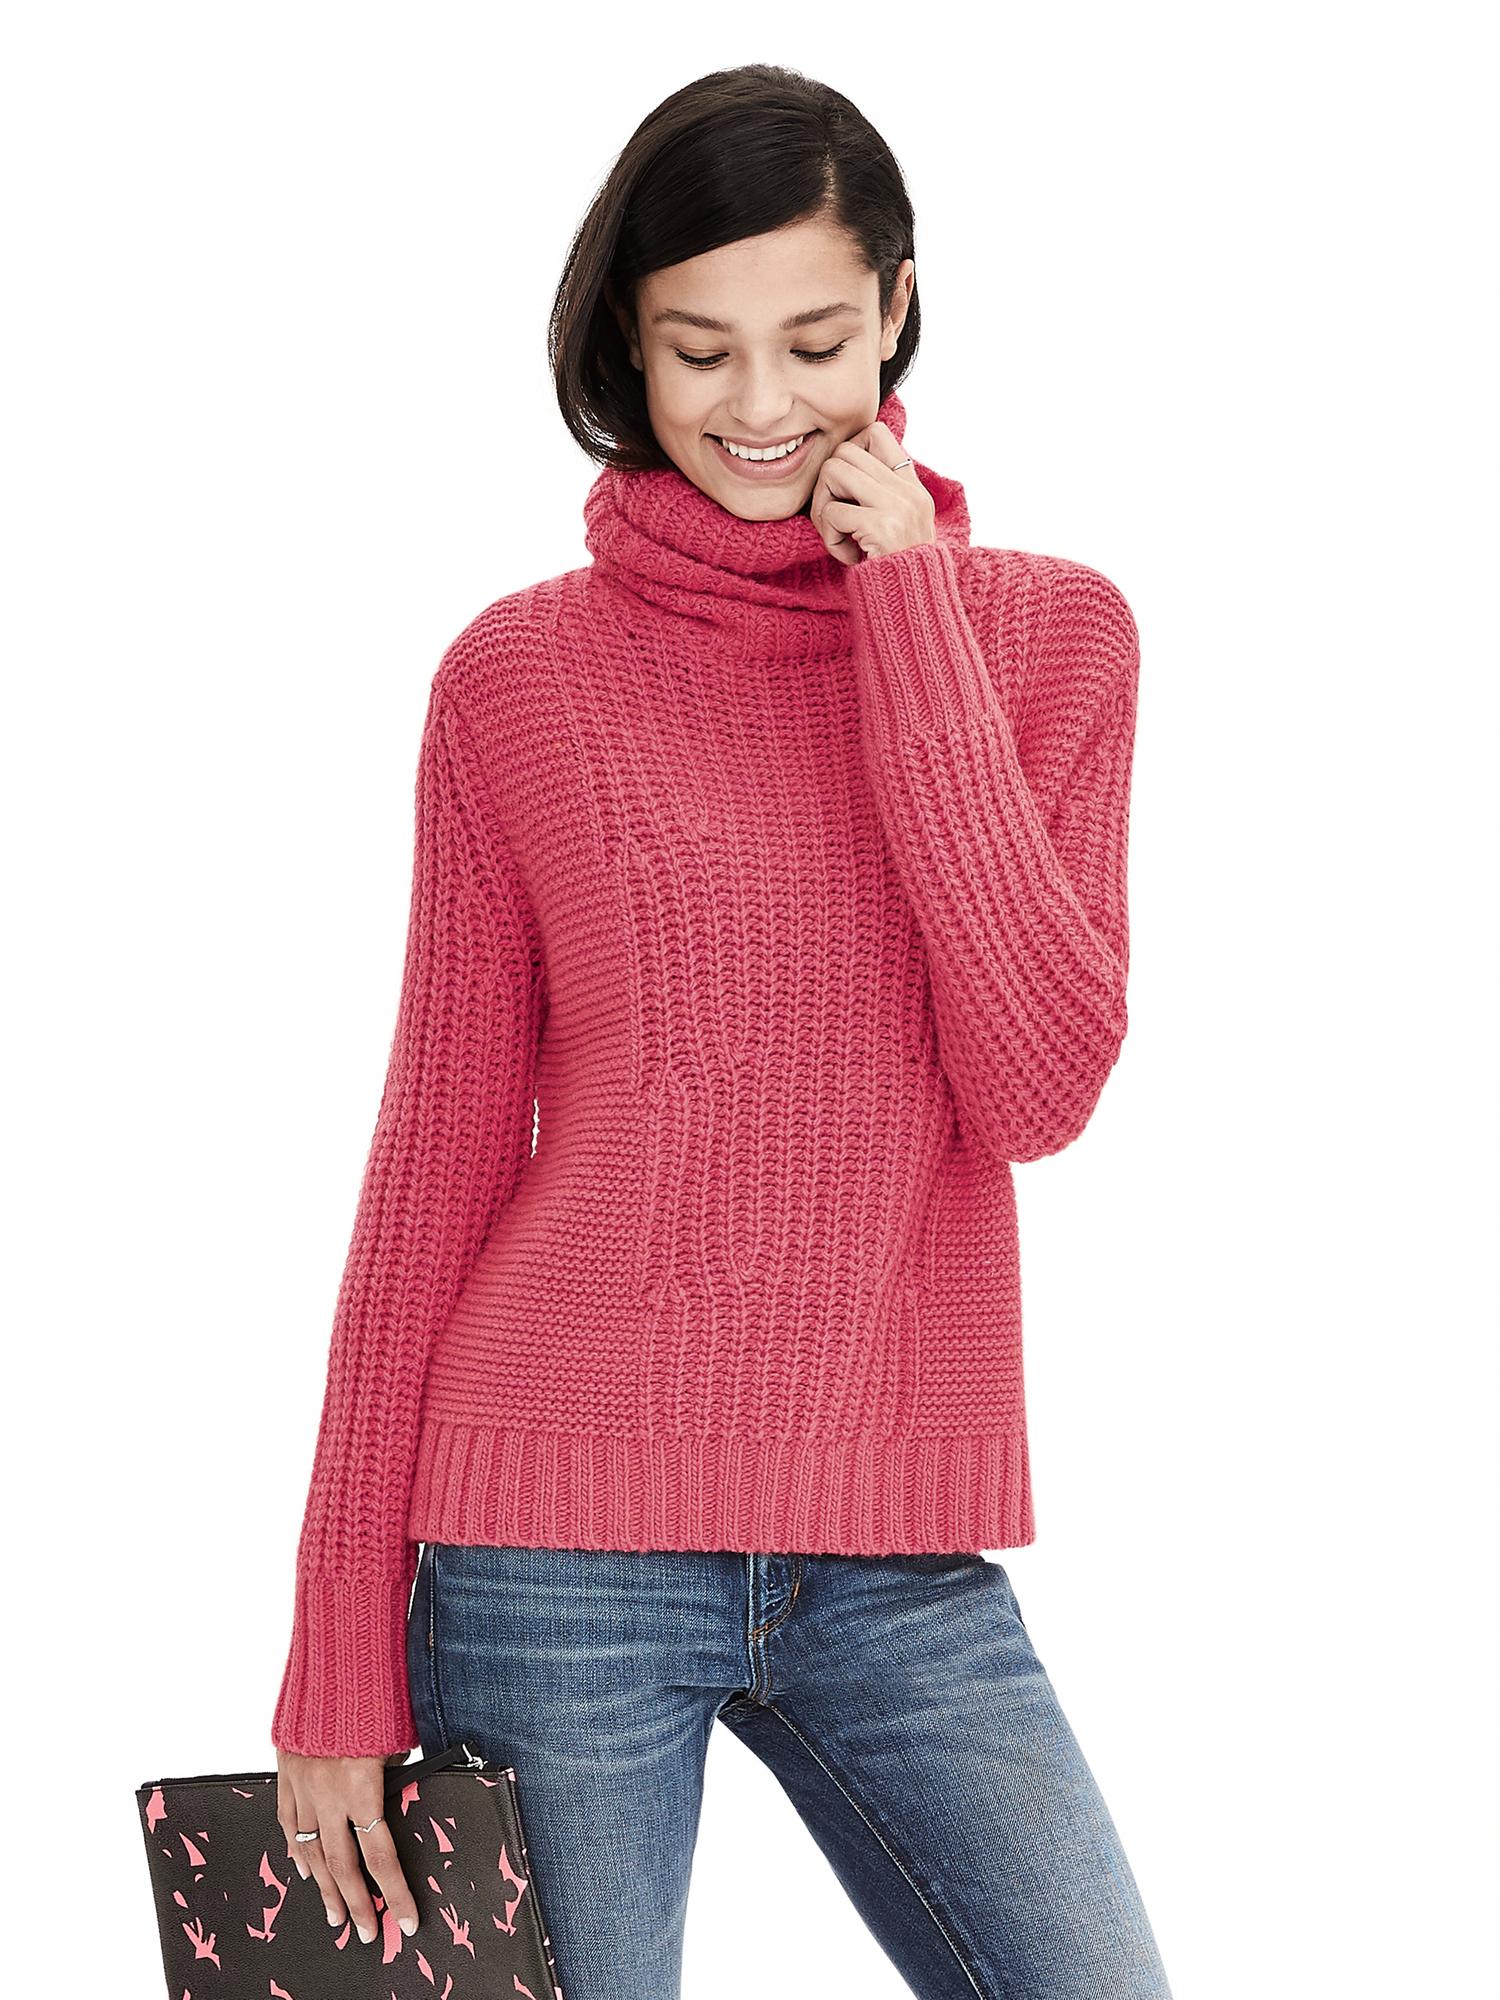 Mixed-Stitch Turtleneck Sweater